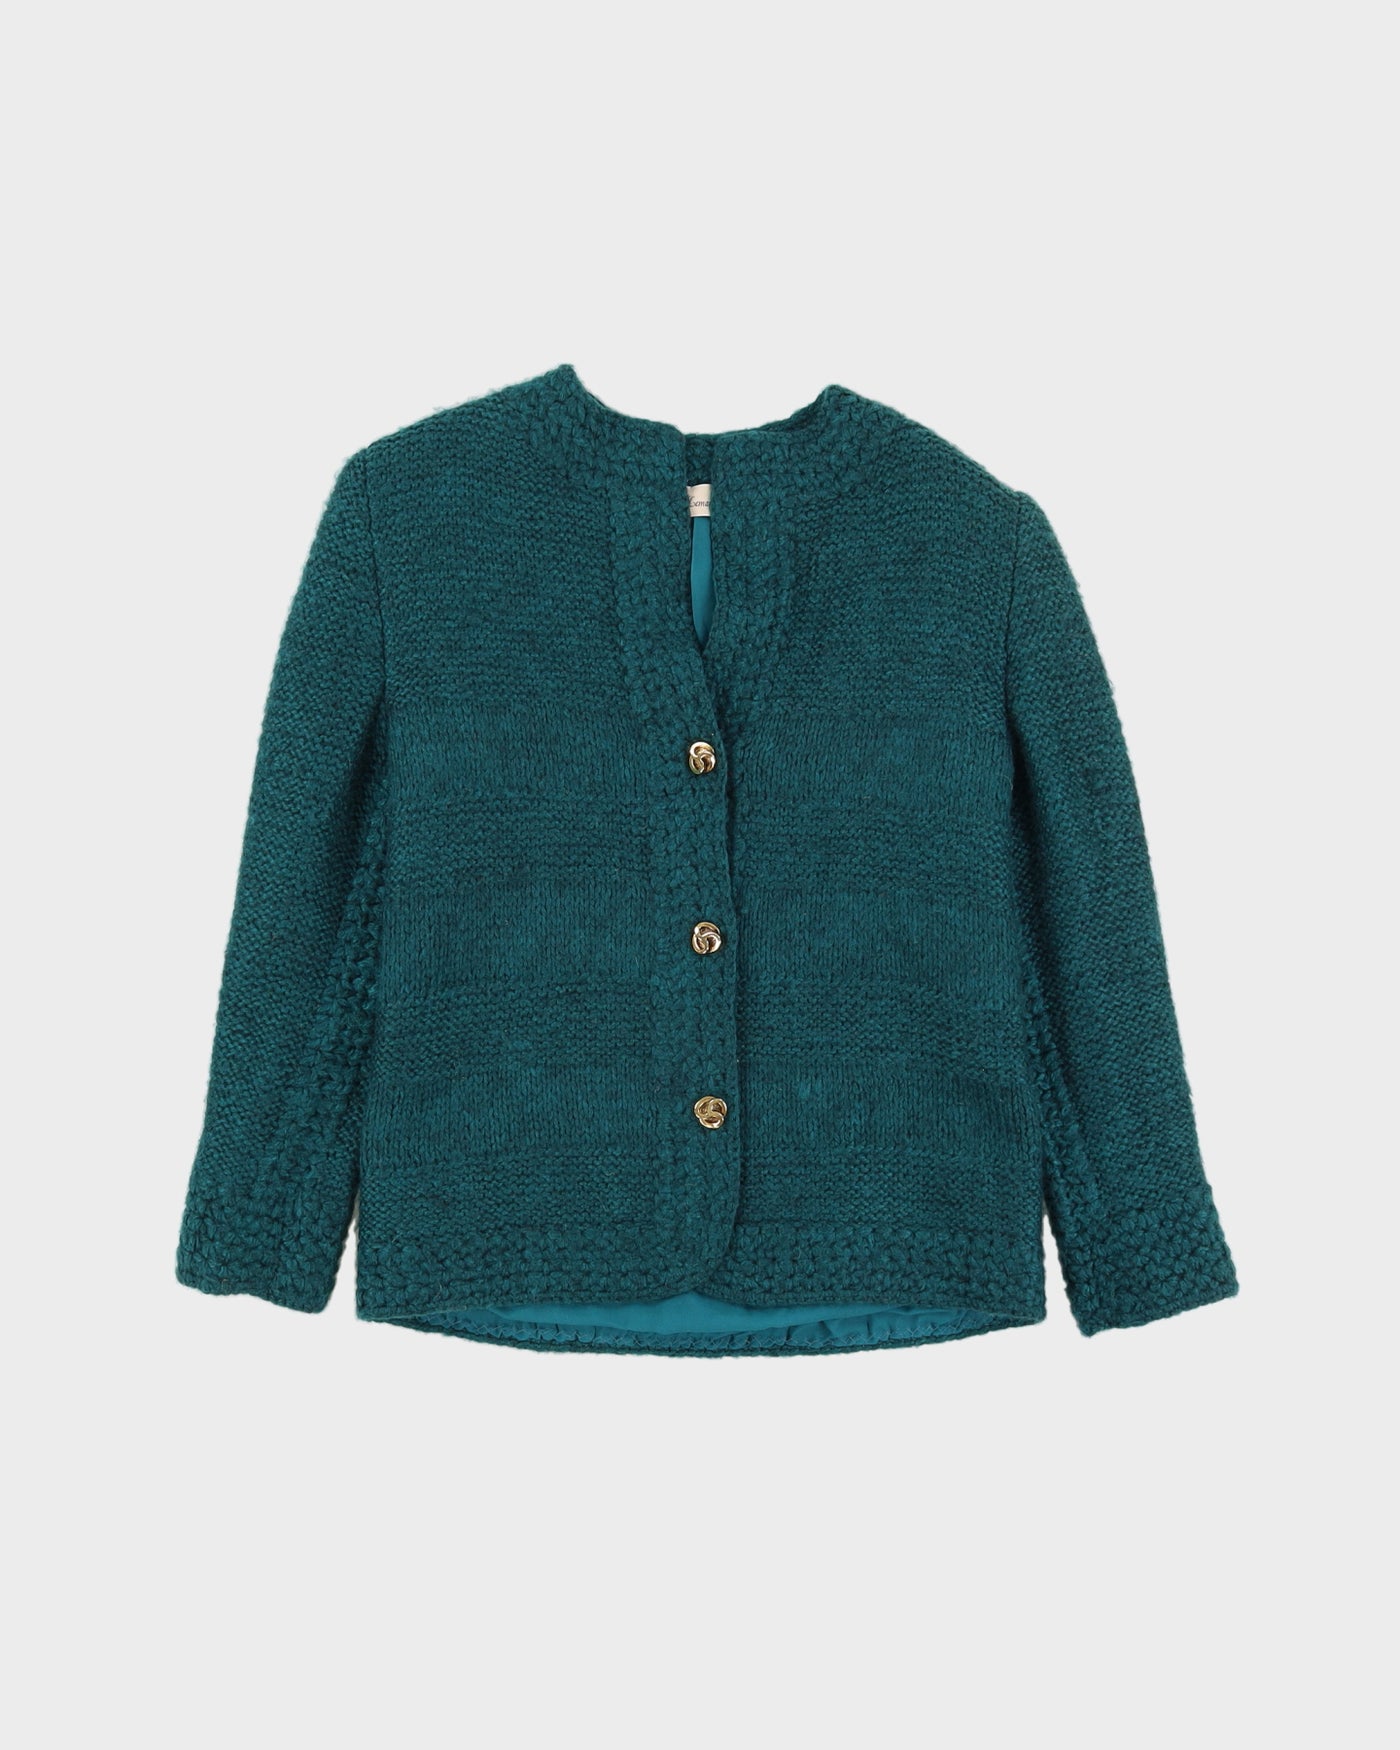 00s Aqua Green Knitted Cardigan - S